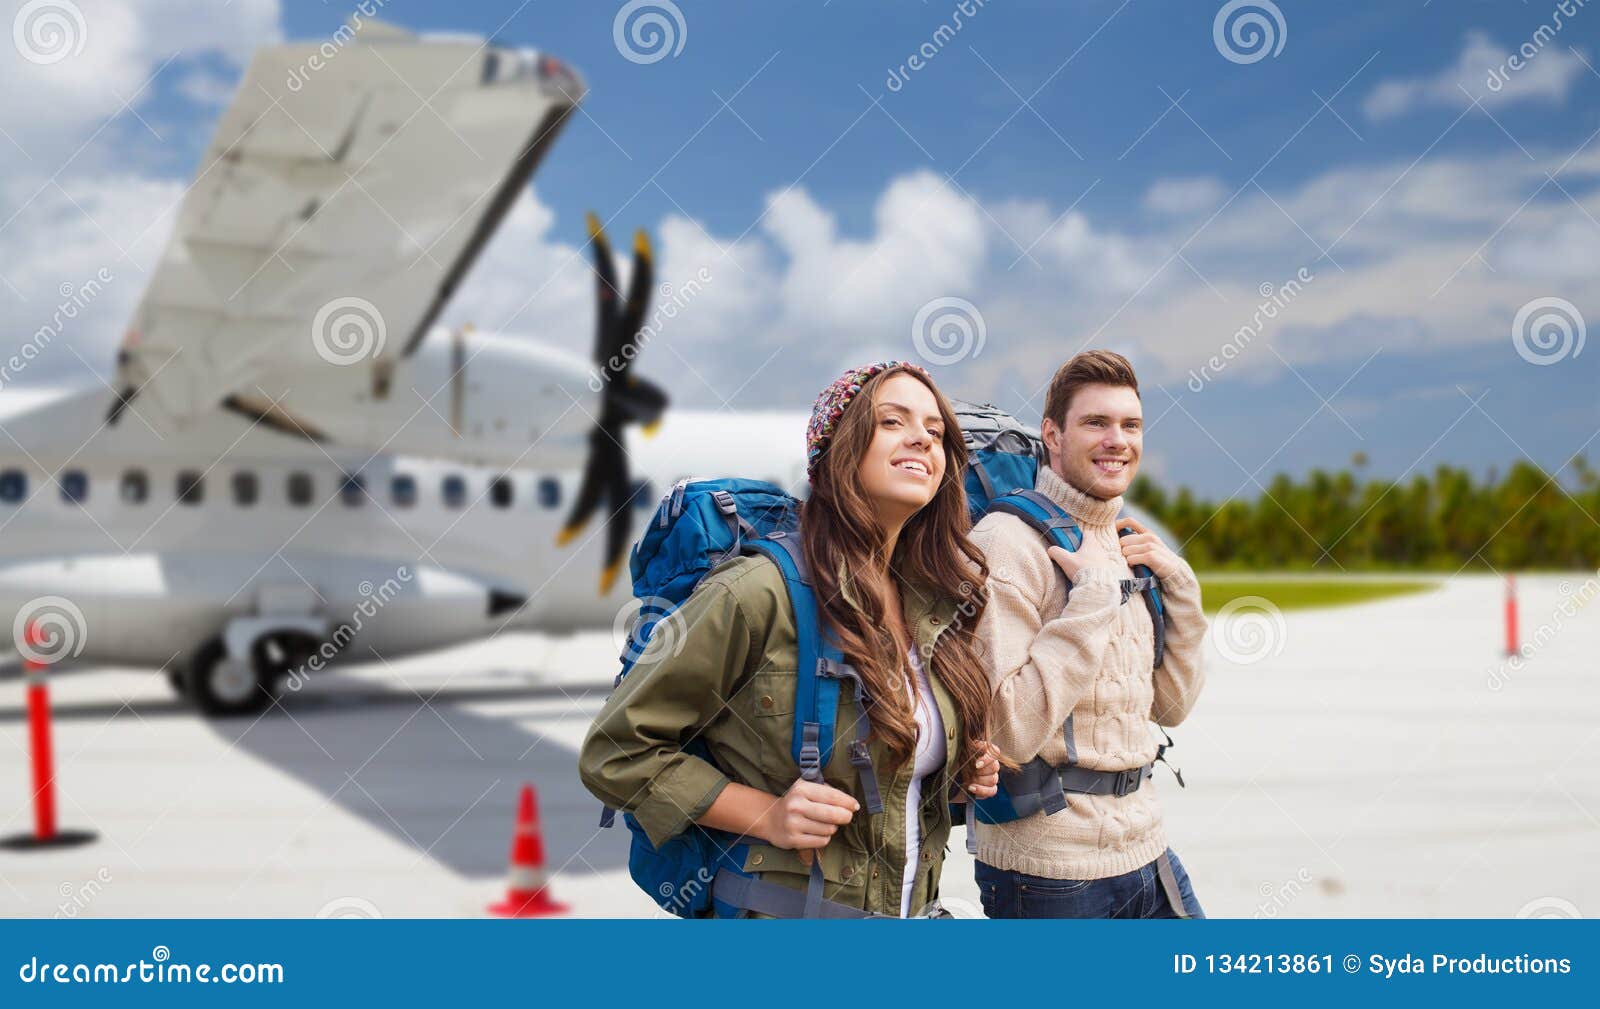 backpacking trip airplane